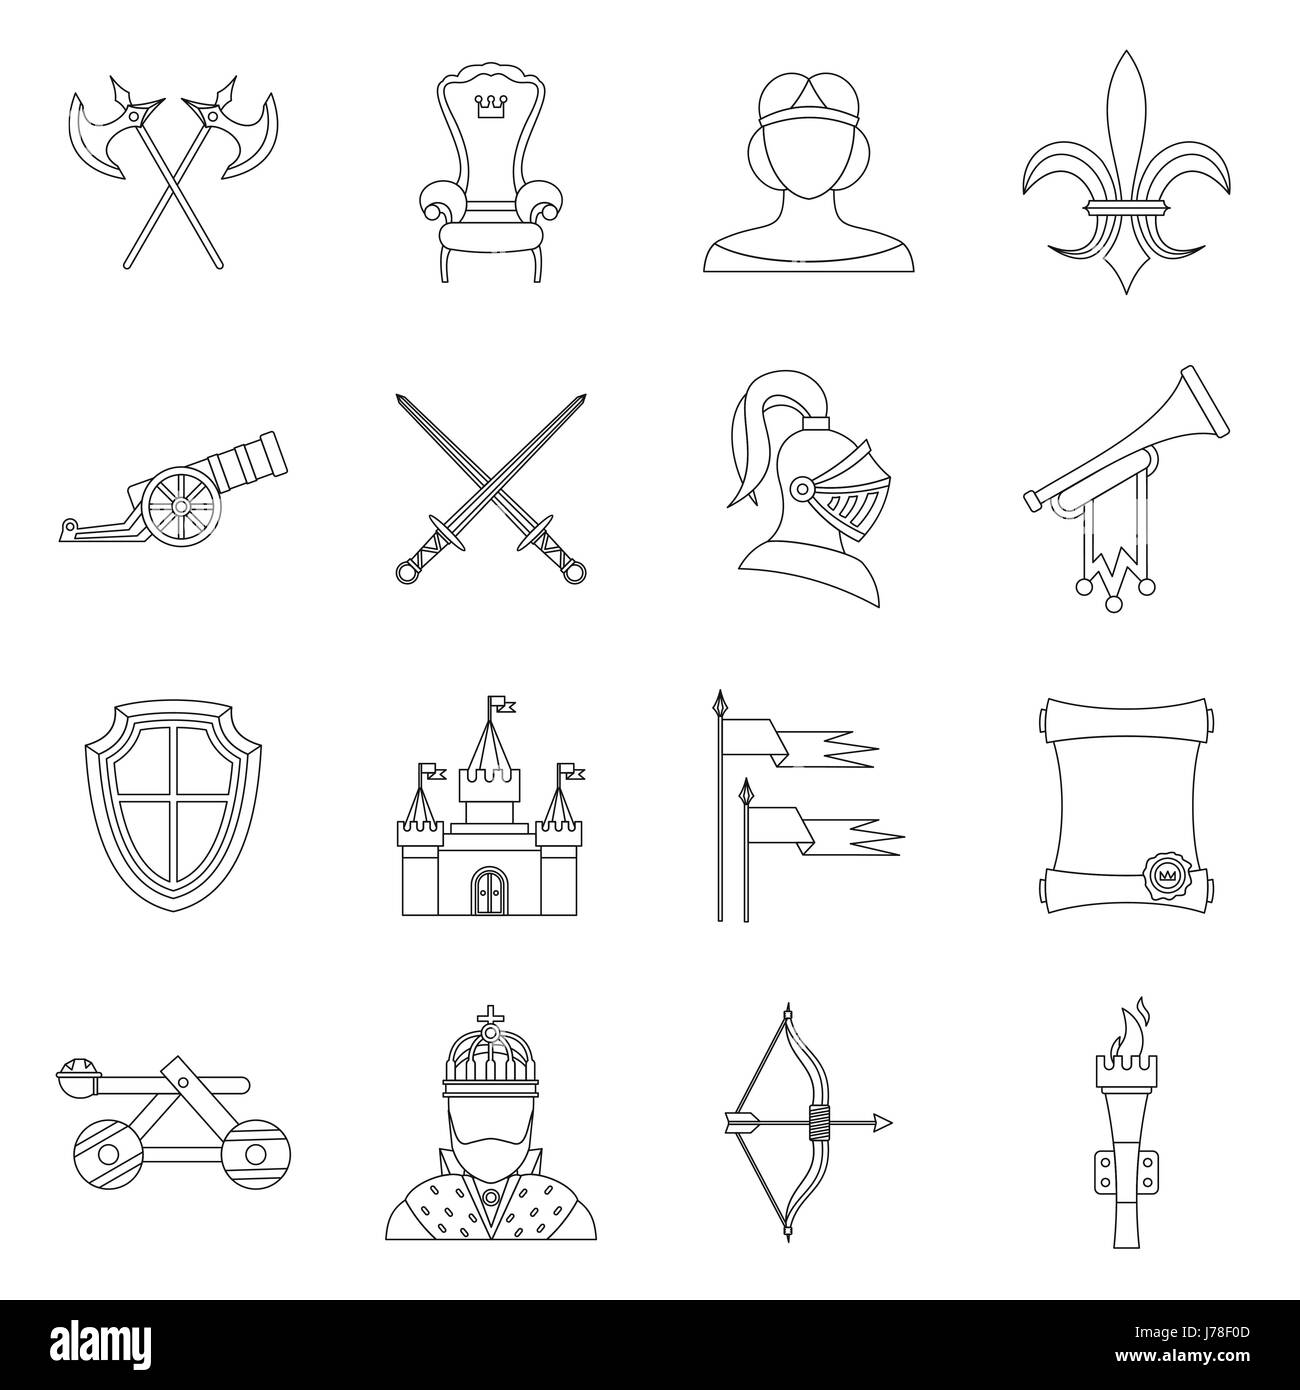 Ritter mittelalterliche Ikonen in Umriss-Stil festgelegt. Mittelalter Krieger Waffen set Sammlung Vektor-illustration Stock Vektor